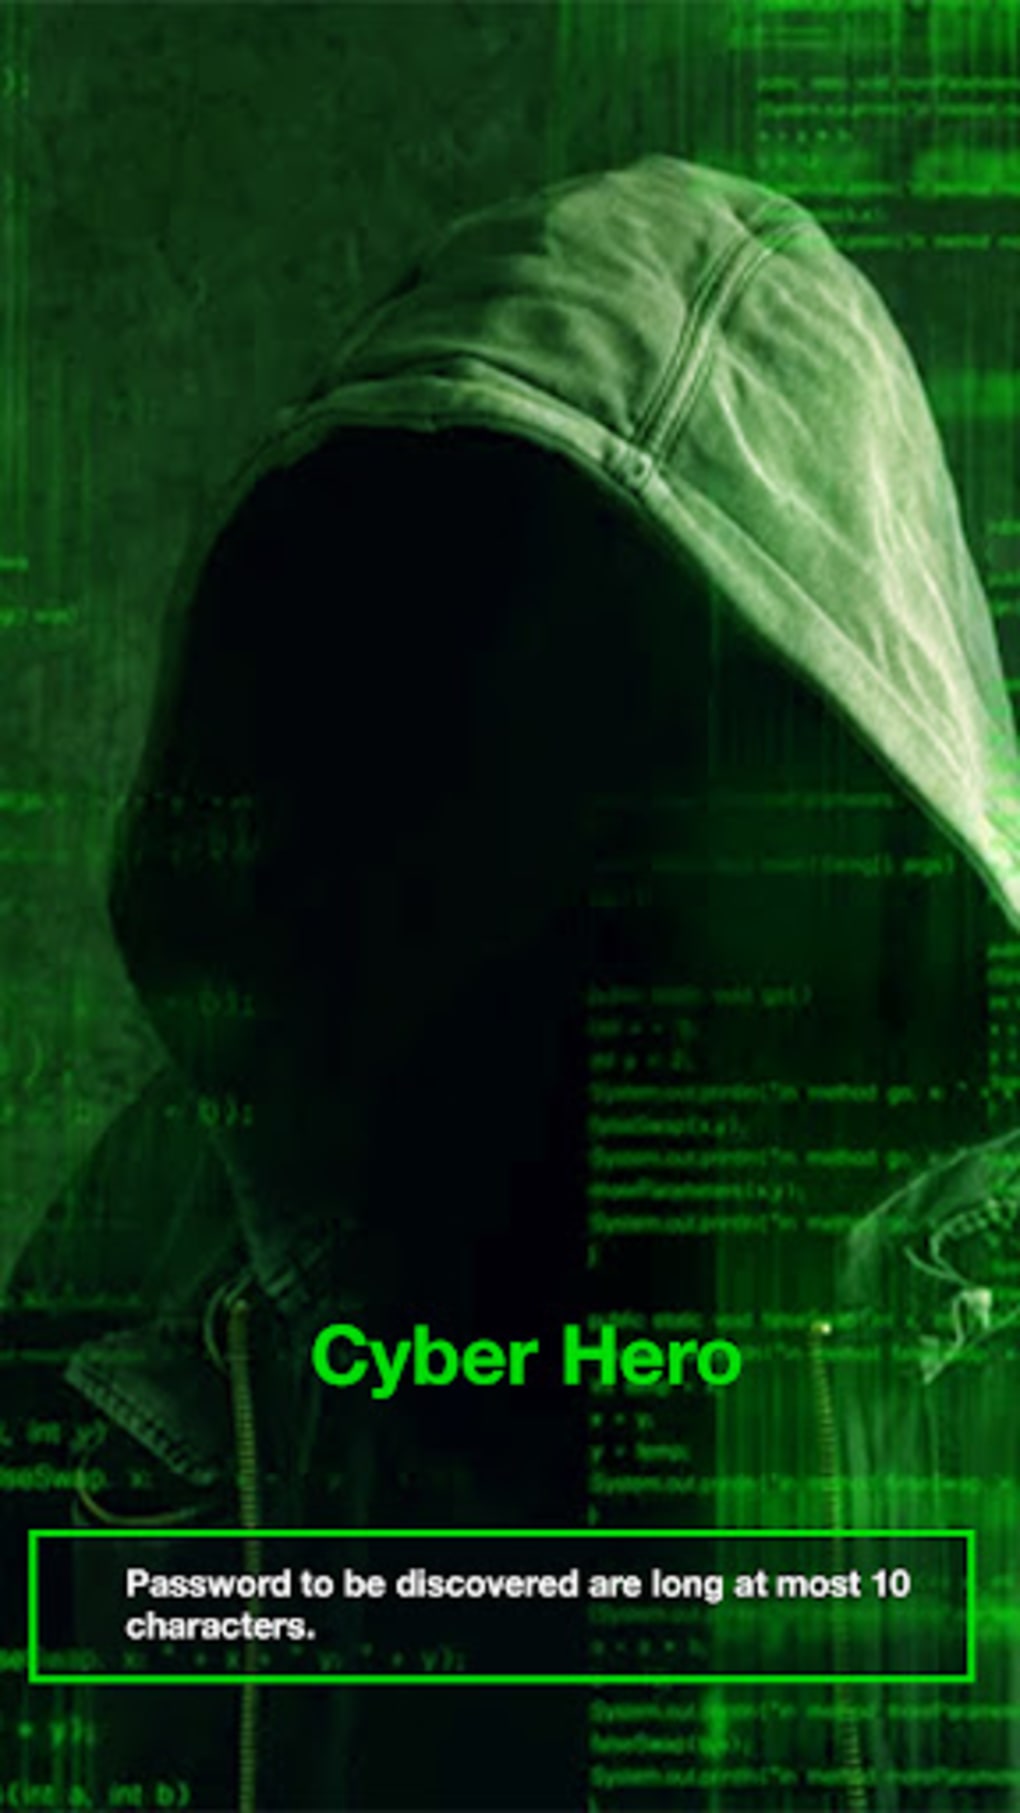 Hacking Hero Hacker Clicker - Play Hacking Hero Hacker Clicker On